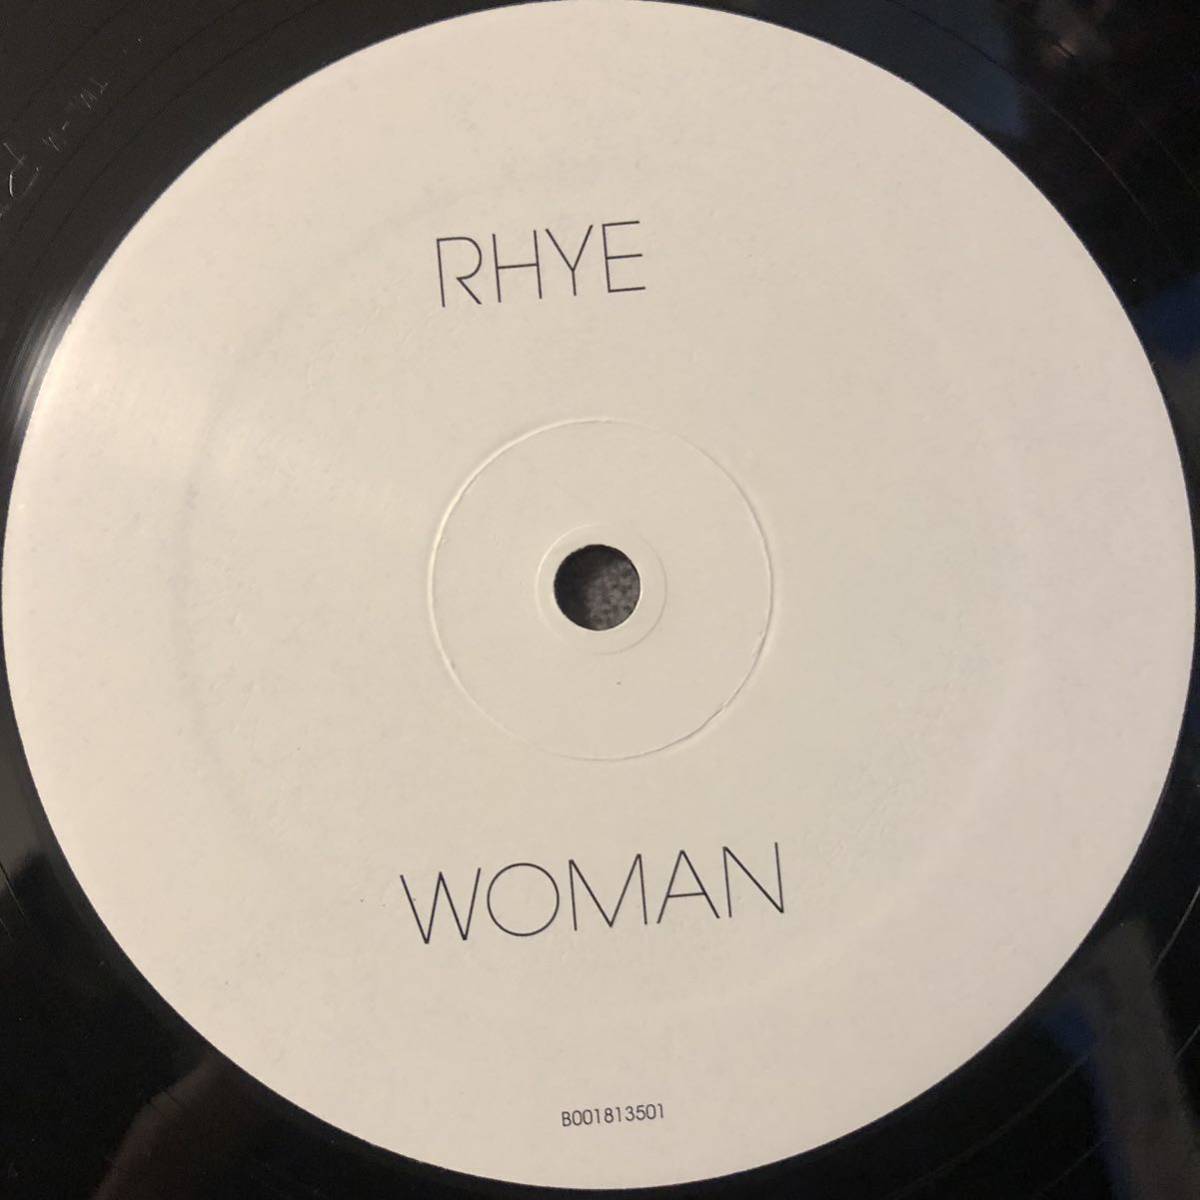 Rhye Woman レコード LP ライ ウーマン アナログ vinyl | dkkaravan.com.tr